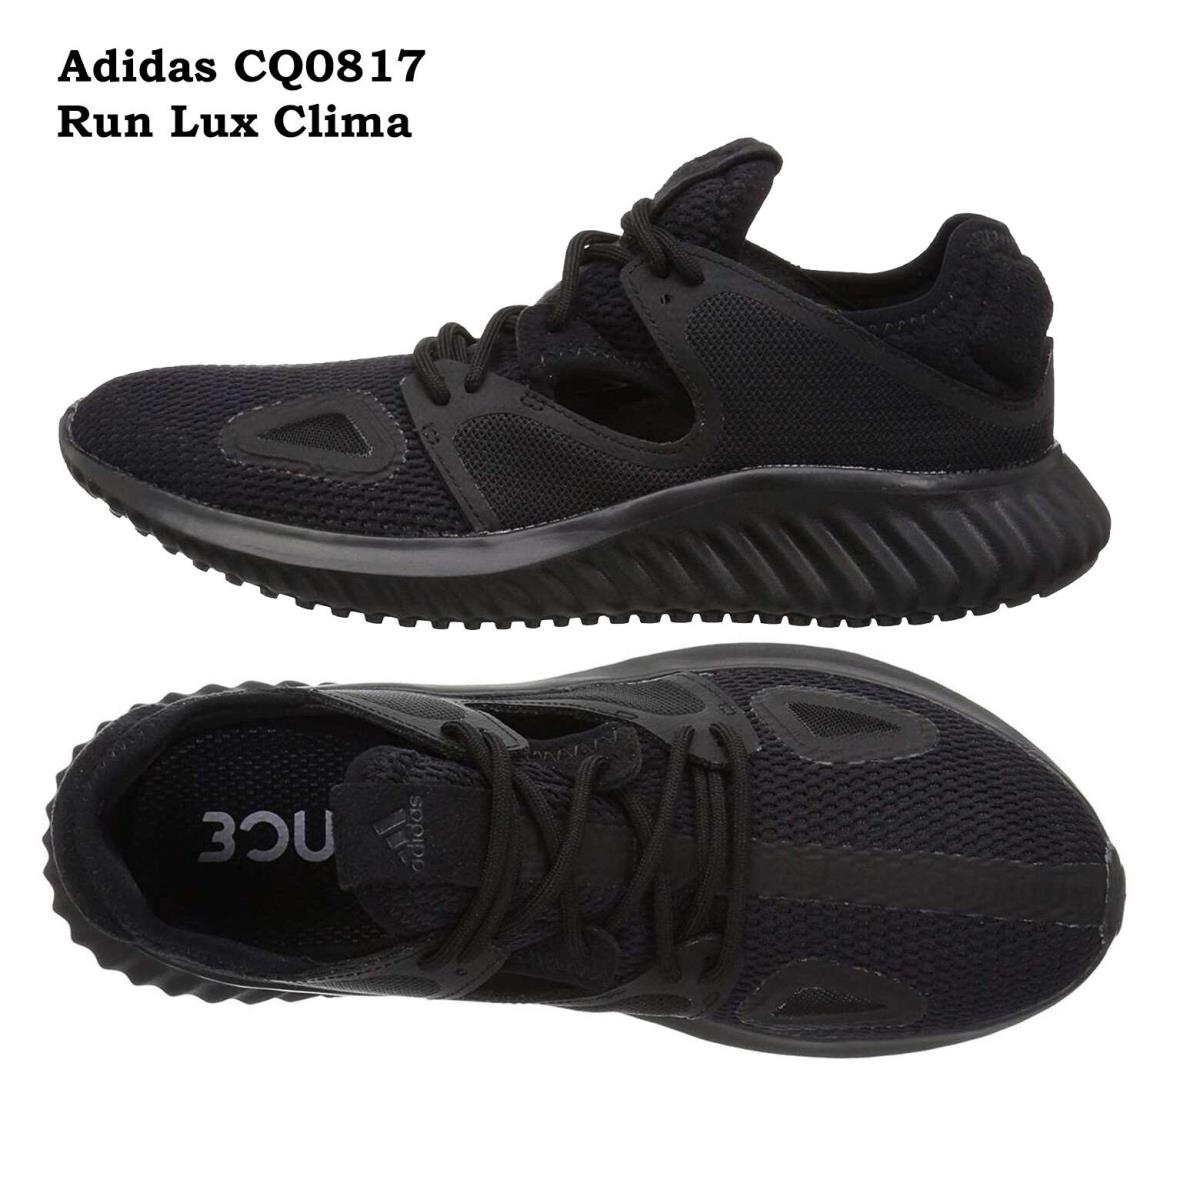 Women Adidas Shoes Black Run Lux Clima Running Shoes Adidas Bounce Series AQ0817